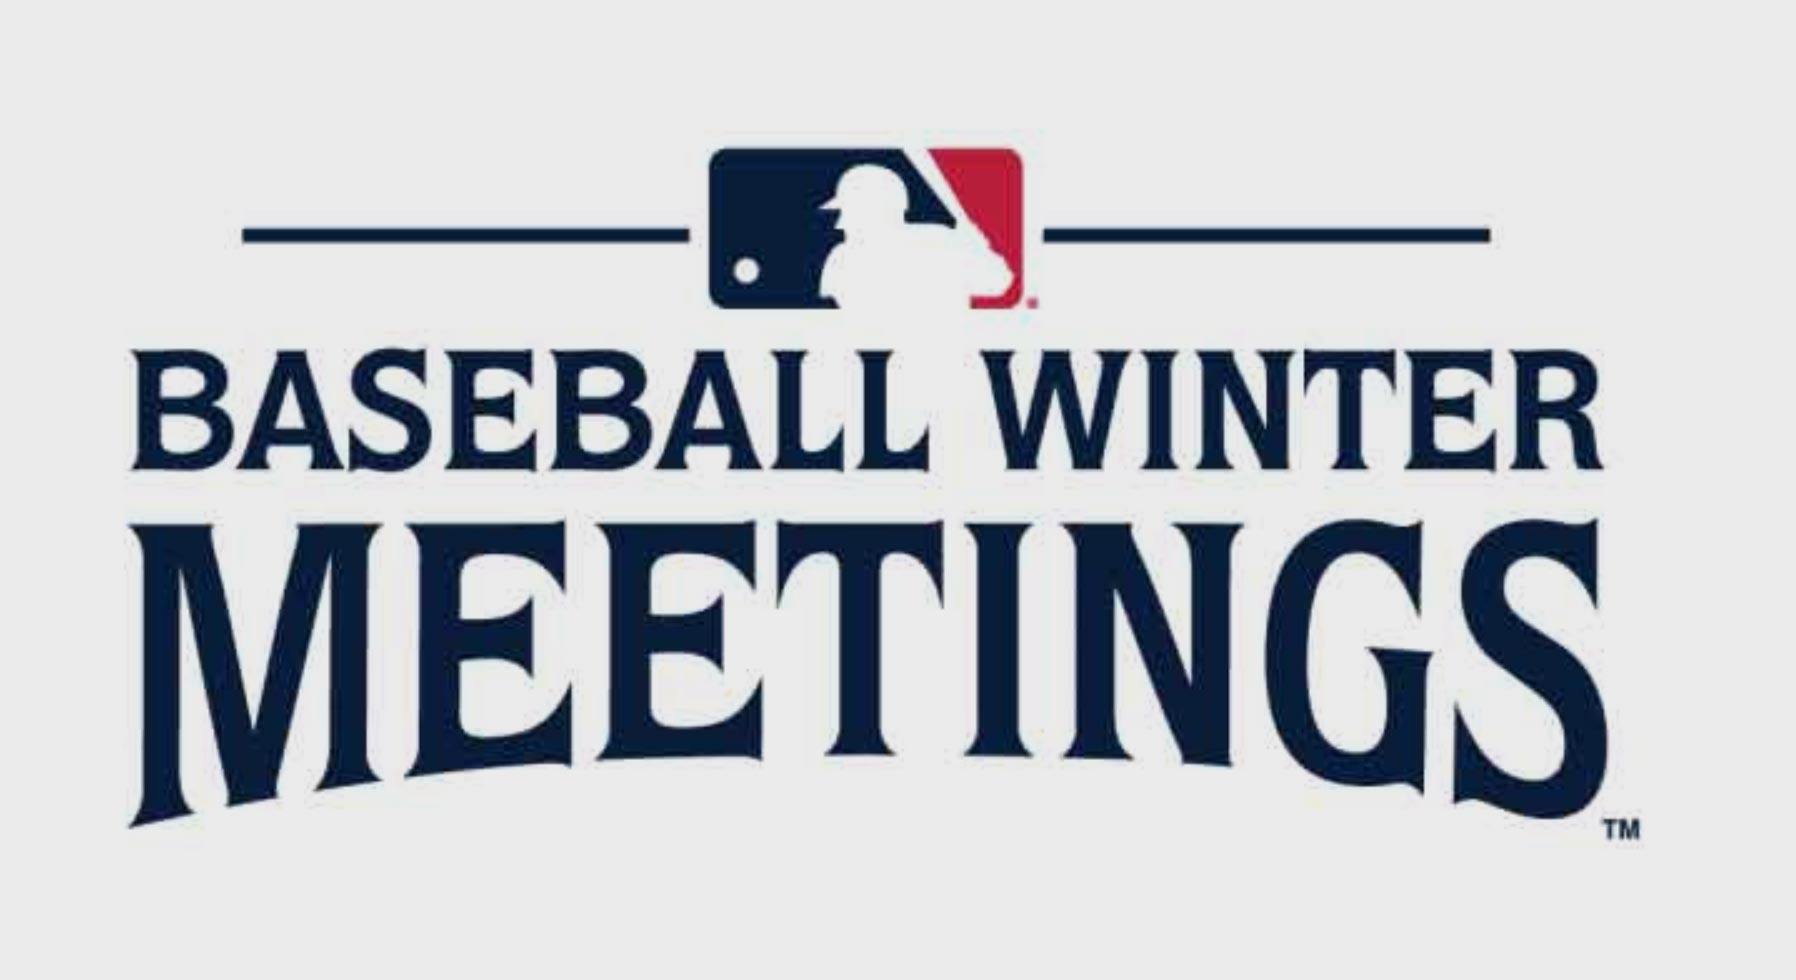 Baseball Winter meeting